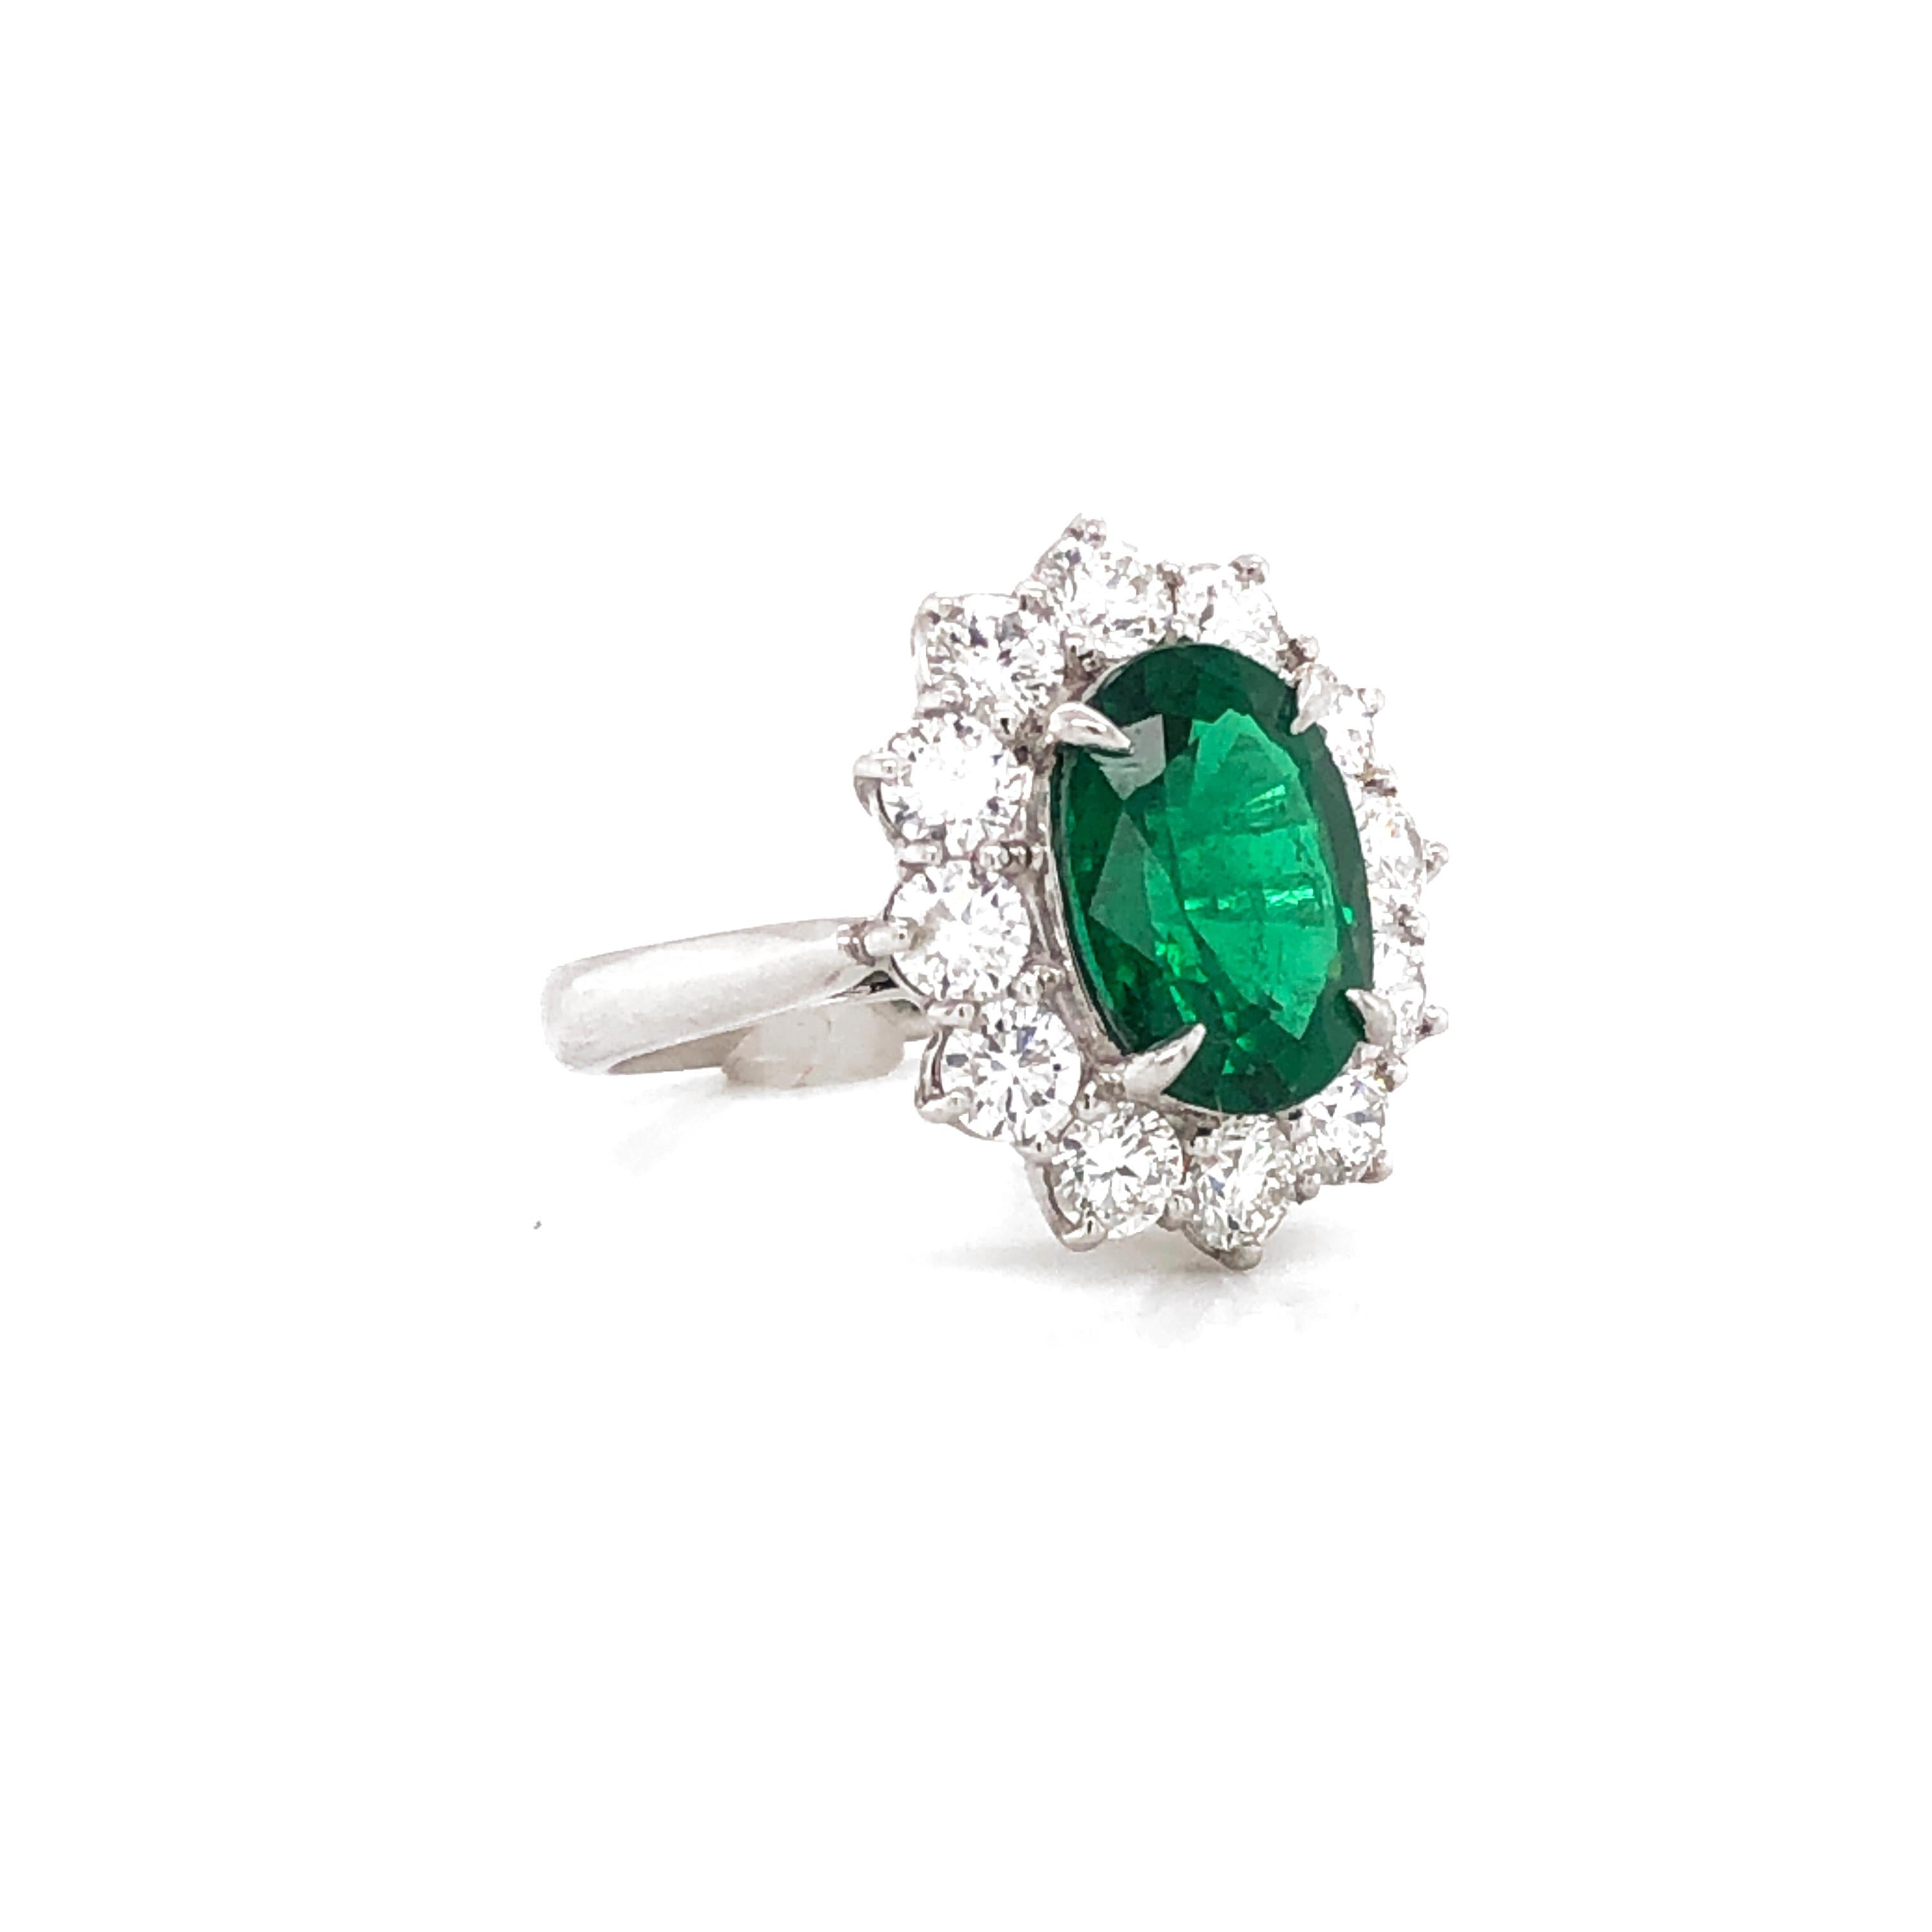 Contemporary Certified Zambian Oval Cut Emerald 3.22 Carat Total Diamond Platinum Ring